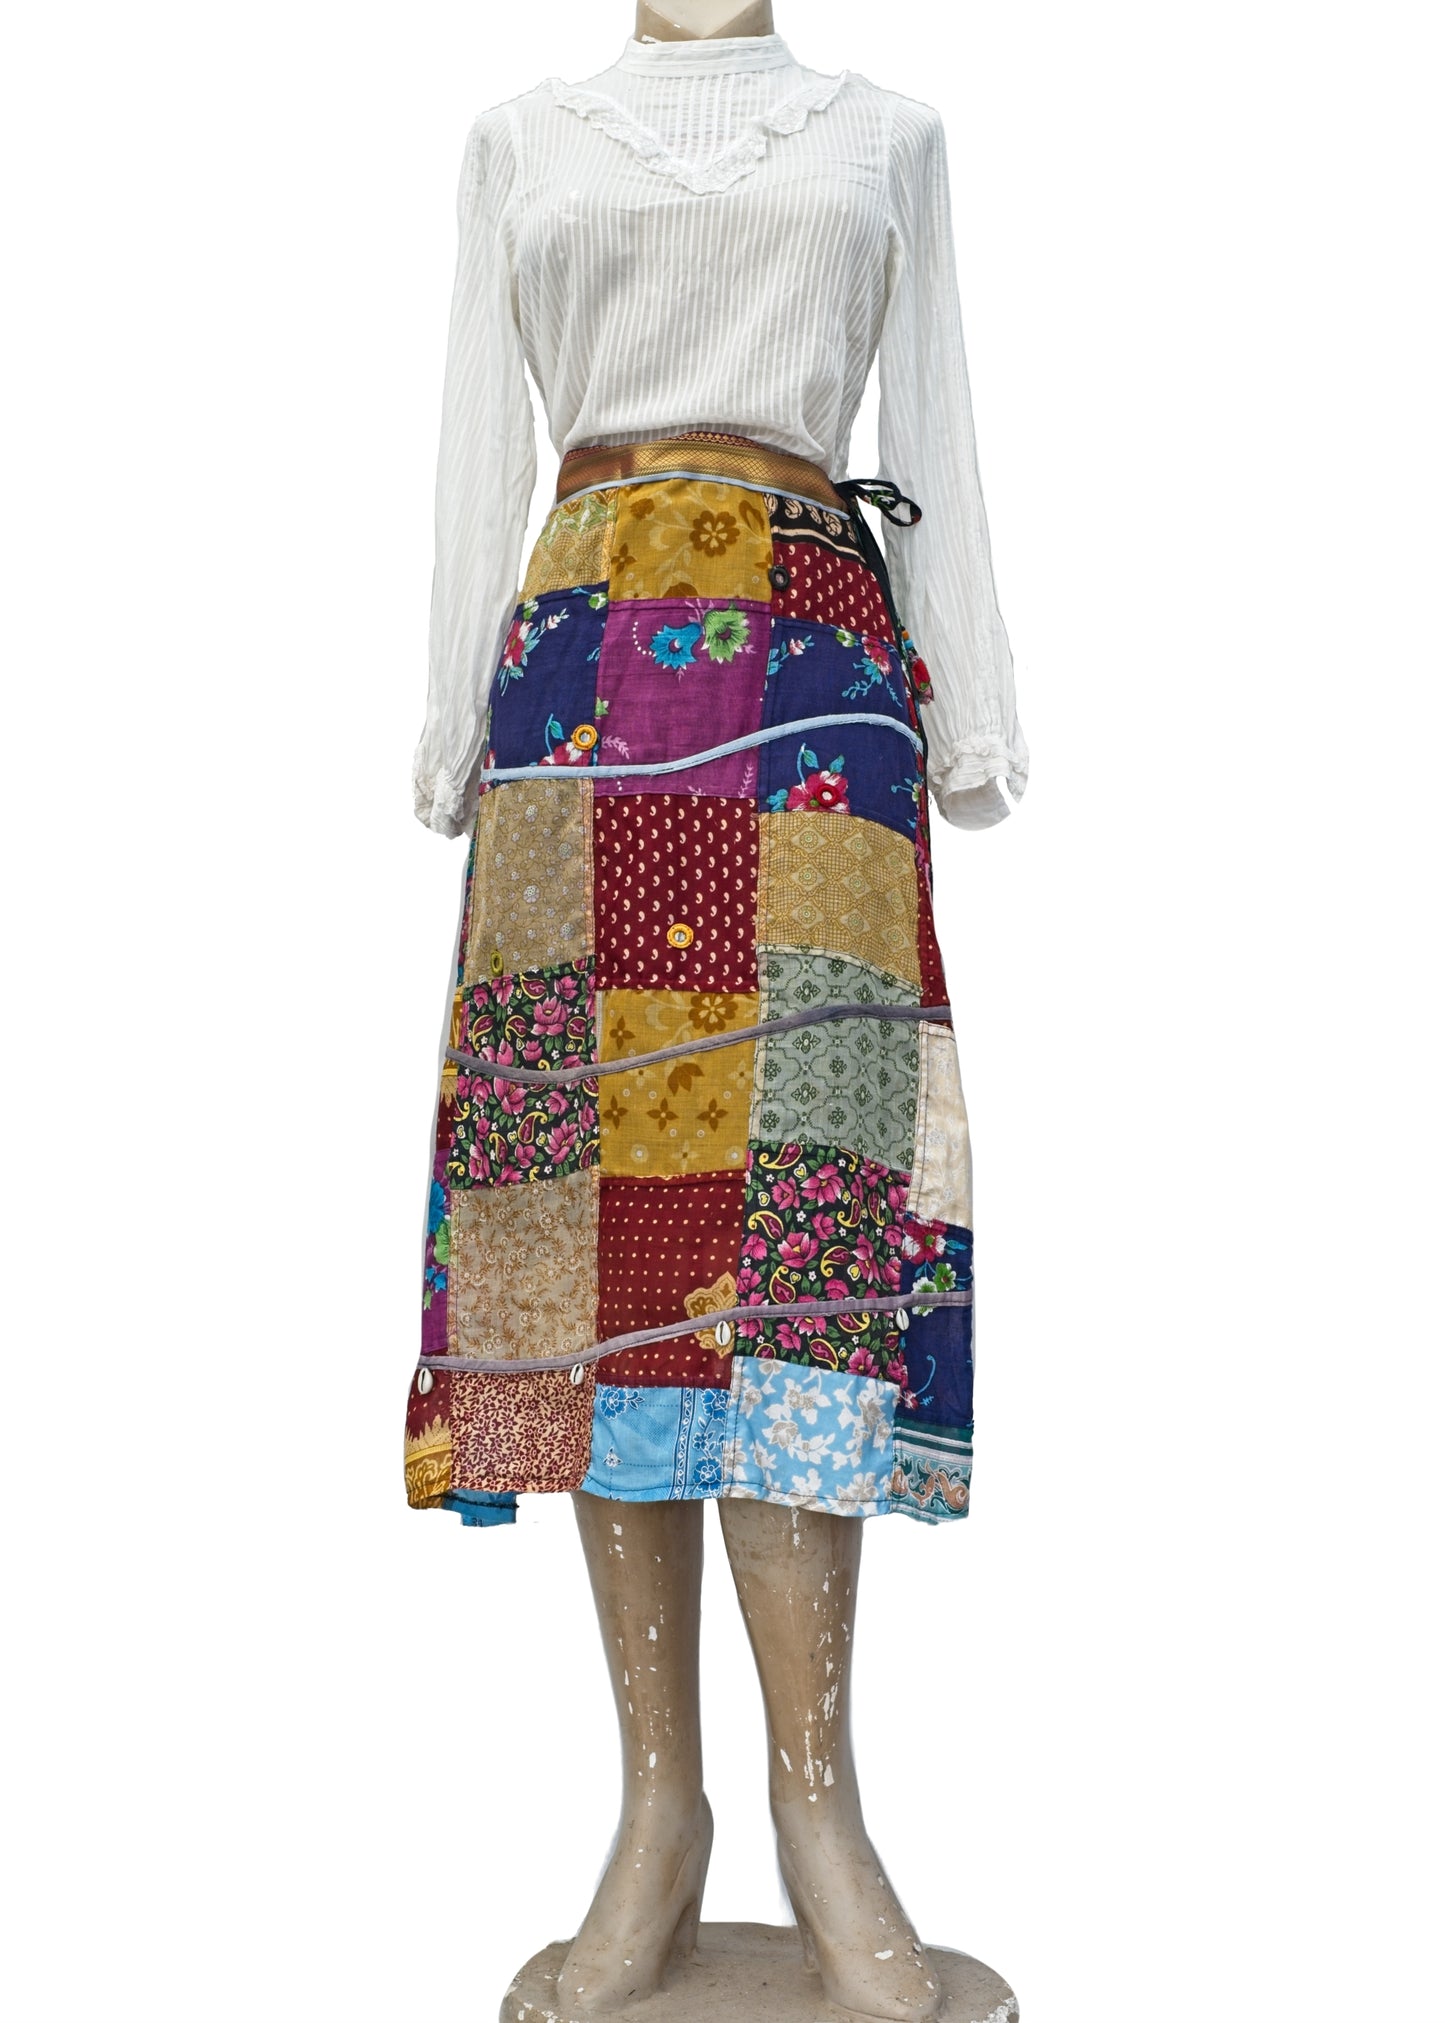 Vintage Hippie Indian Cotton Patchwork Midi Skirt • Cowrie Shells • Mirrors